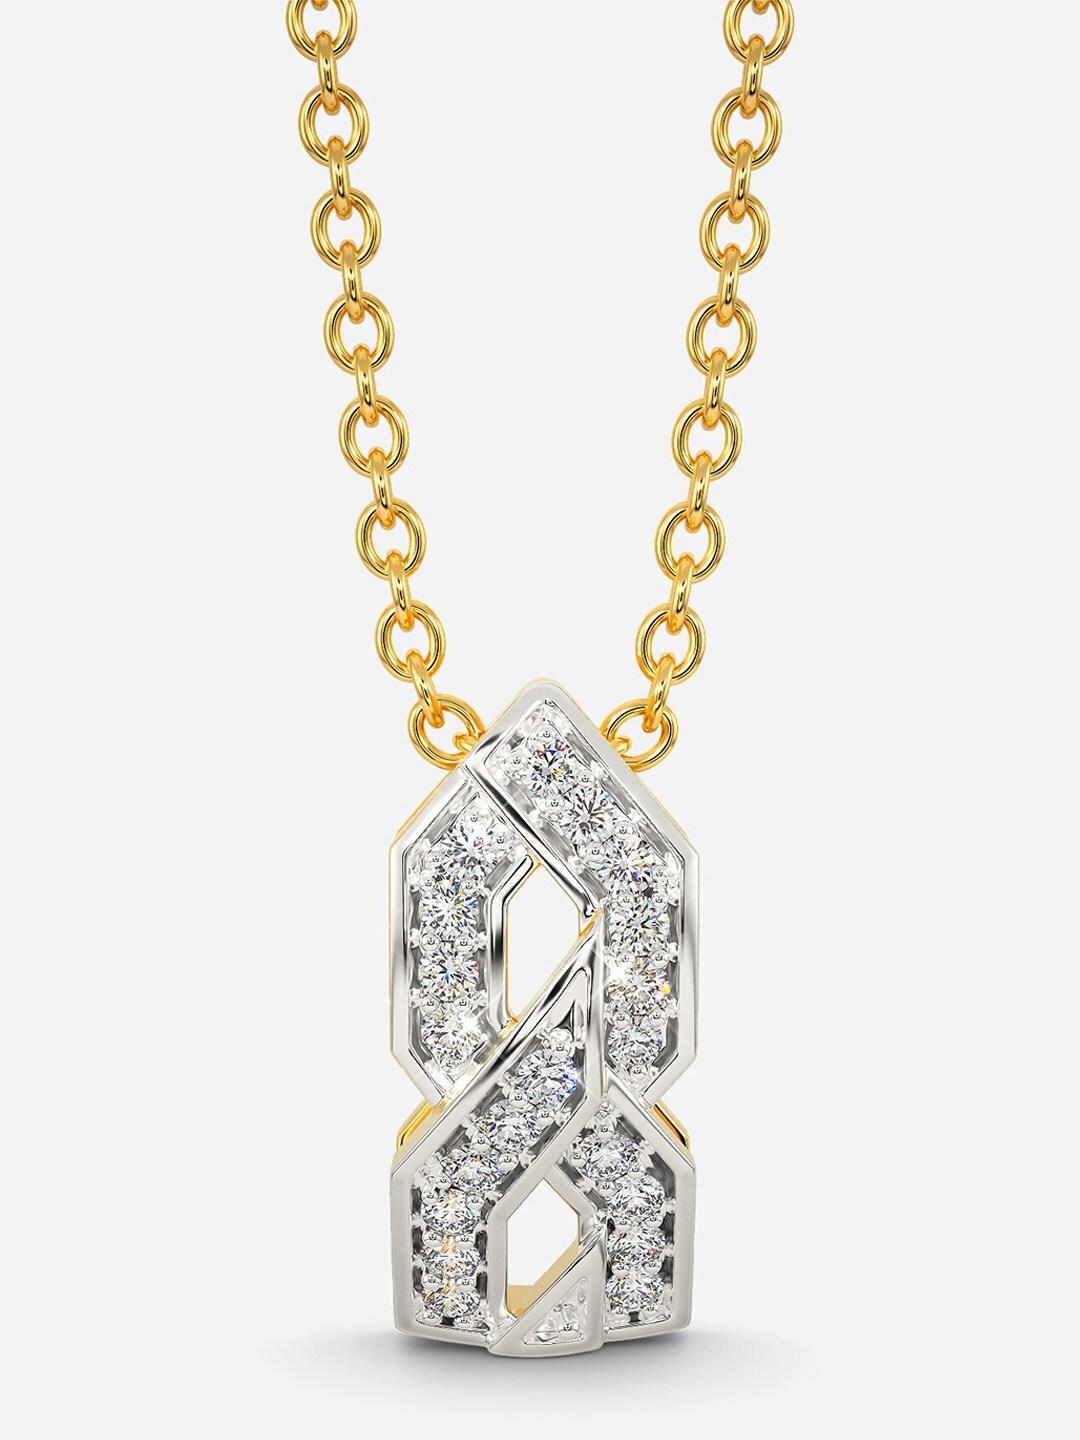 melorra yarn affair rhodium - plated 18kt gold diamond pendant - 1.46 gm